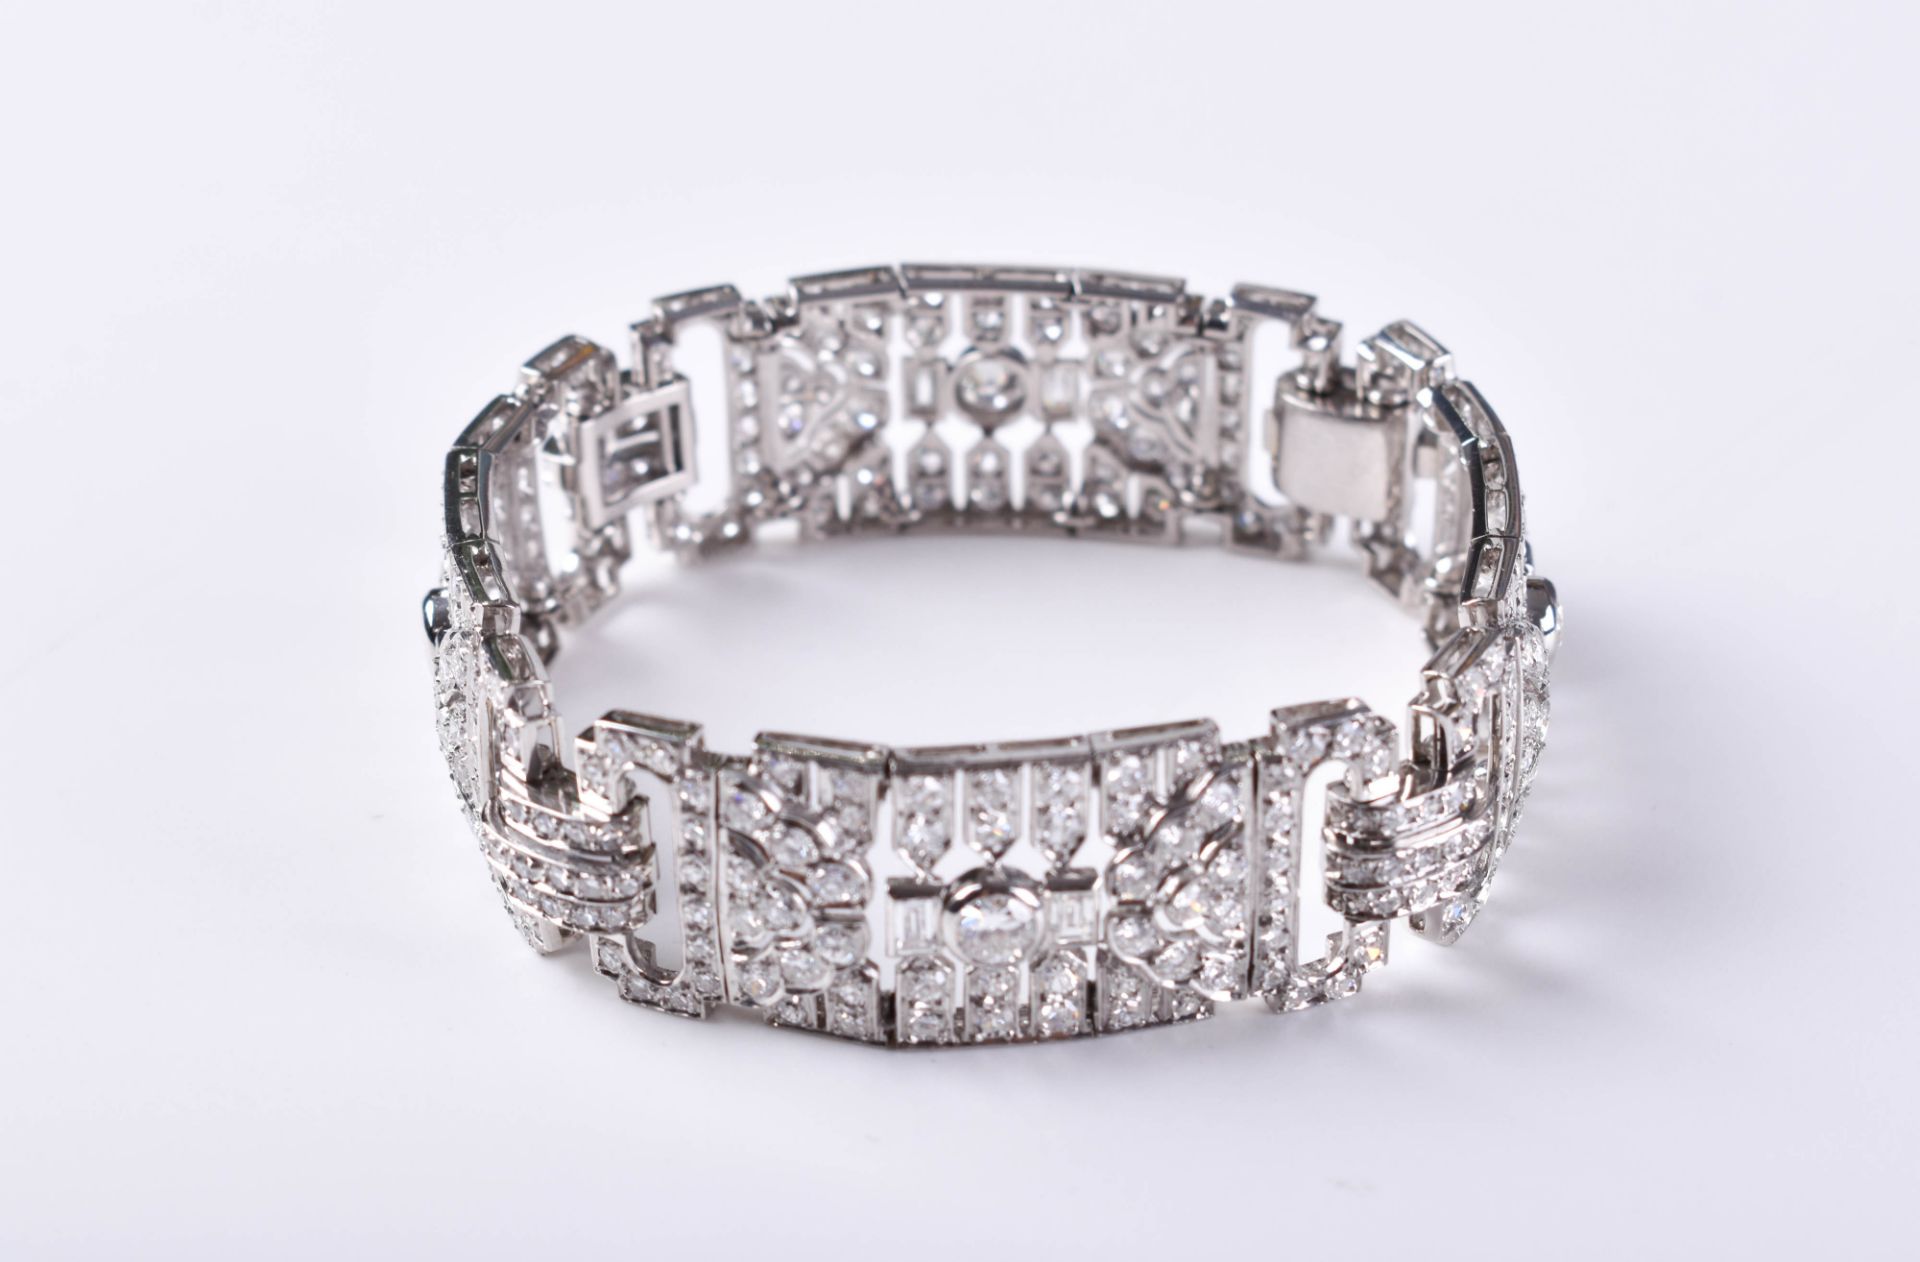  Art Deco diamond bracelet - Image 3 of 8